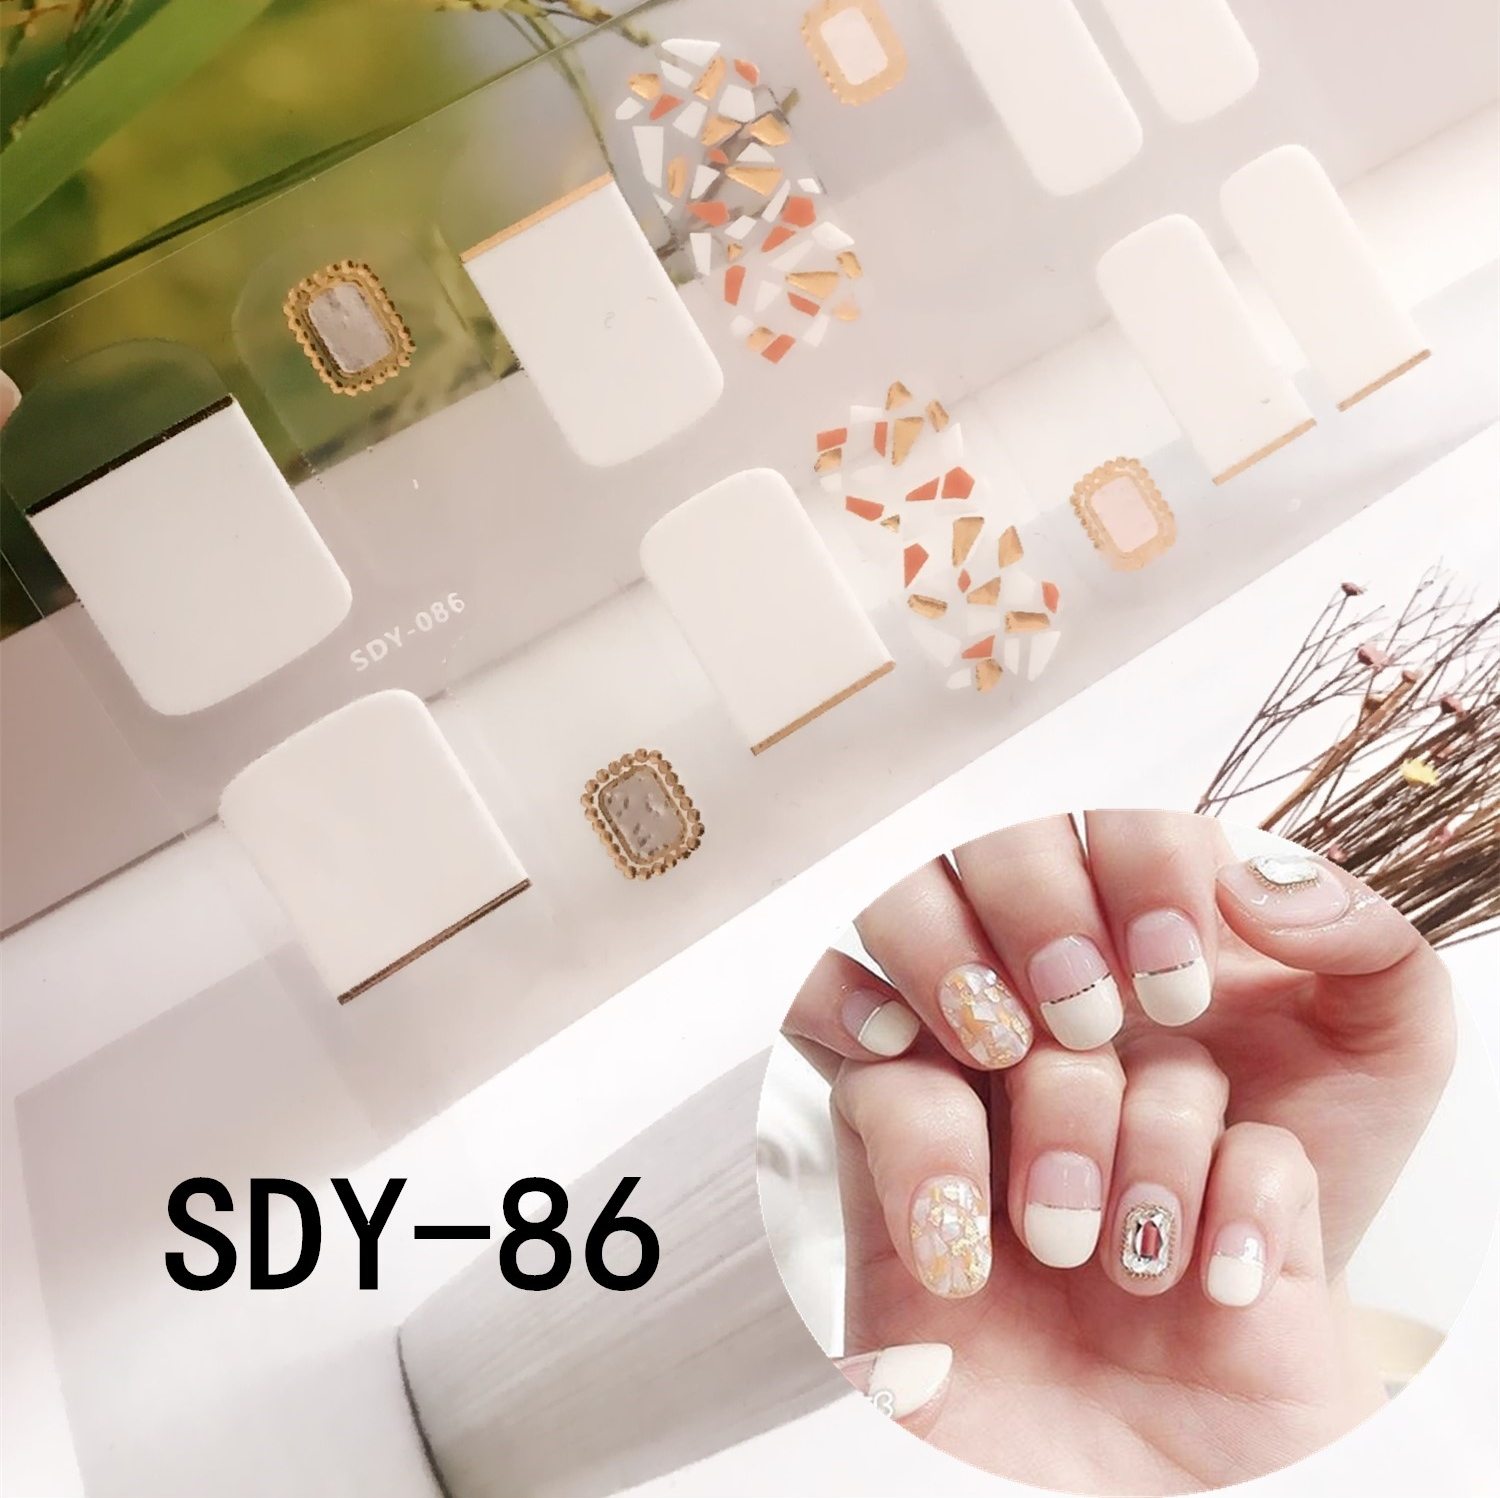 SDY-86